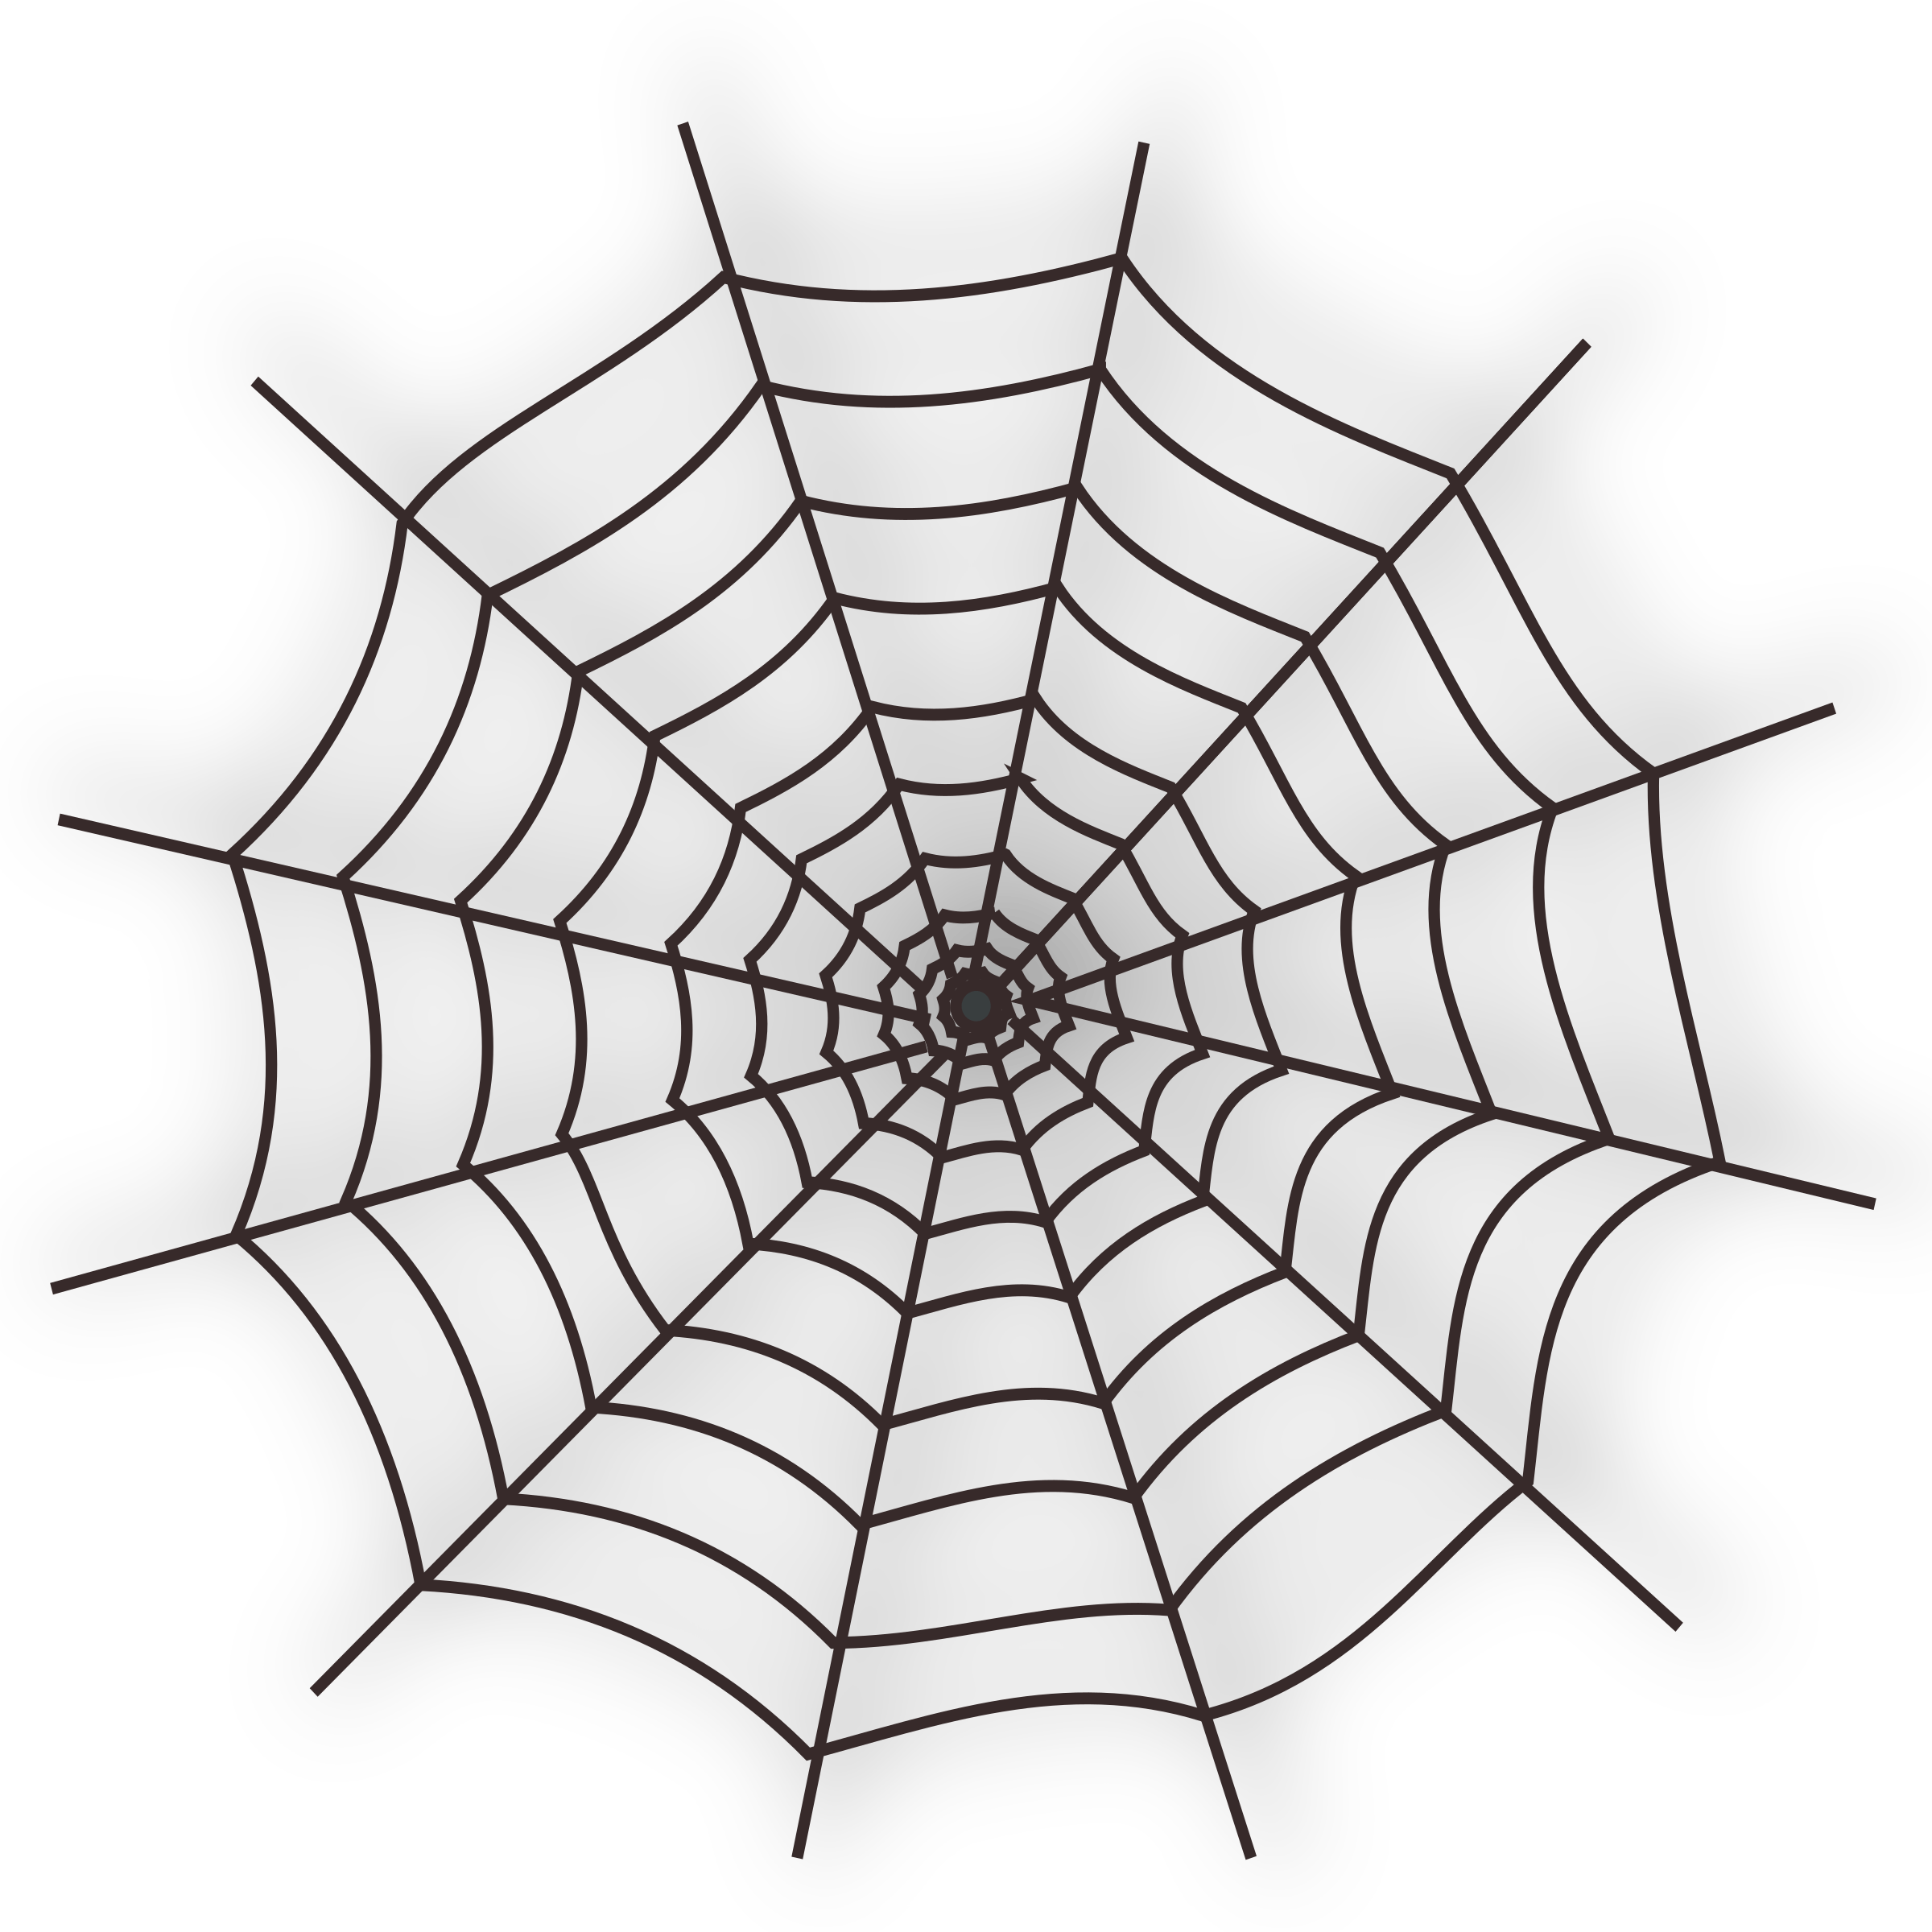 Immagine di PNG gratuita di Halloween Spider Web